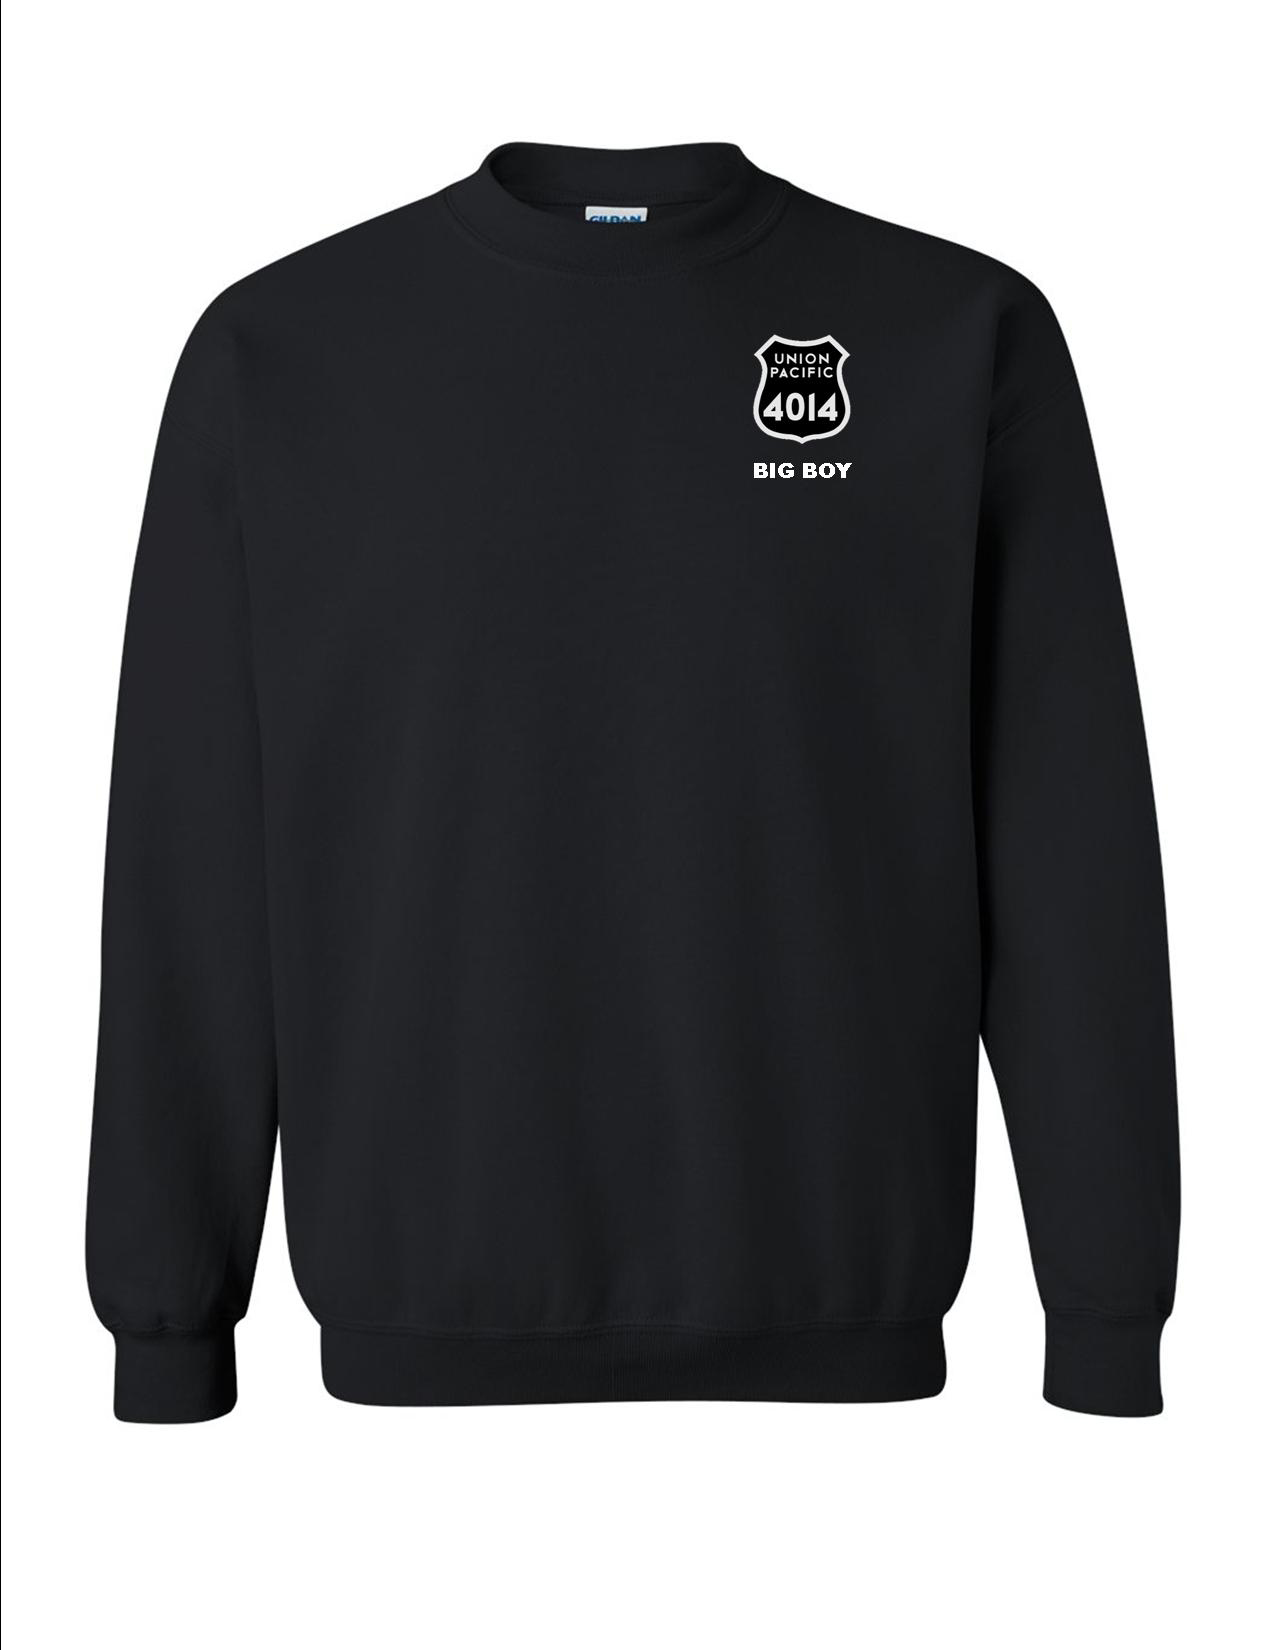 Union Pacific 4014 Embroidered Black Crew Sweatshirt - A-Trains.com